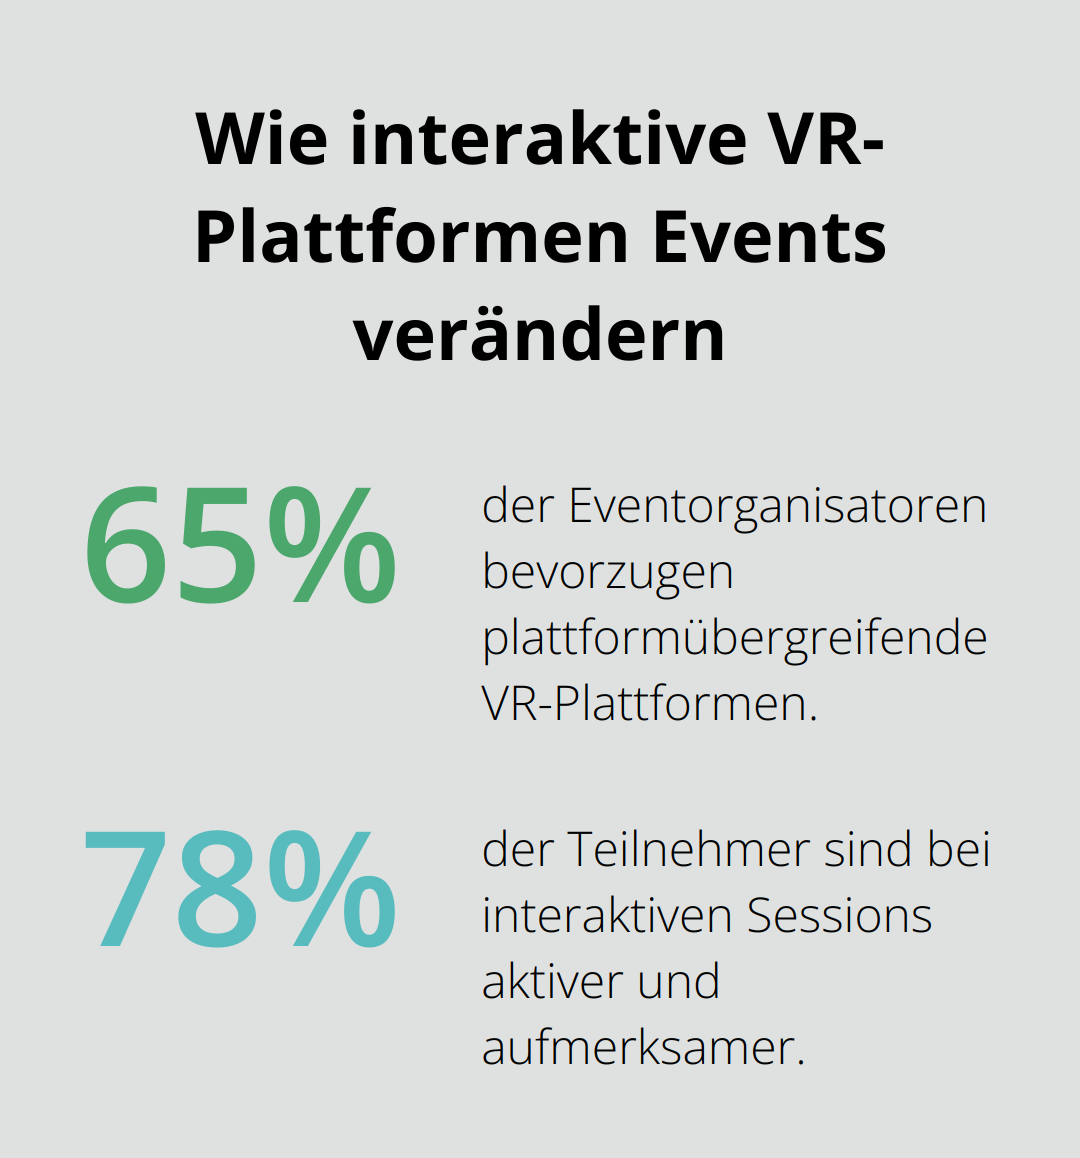 Fact - Wie interaktive VR-Plattformen Events verändern